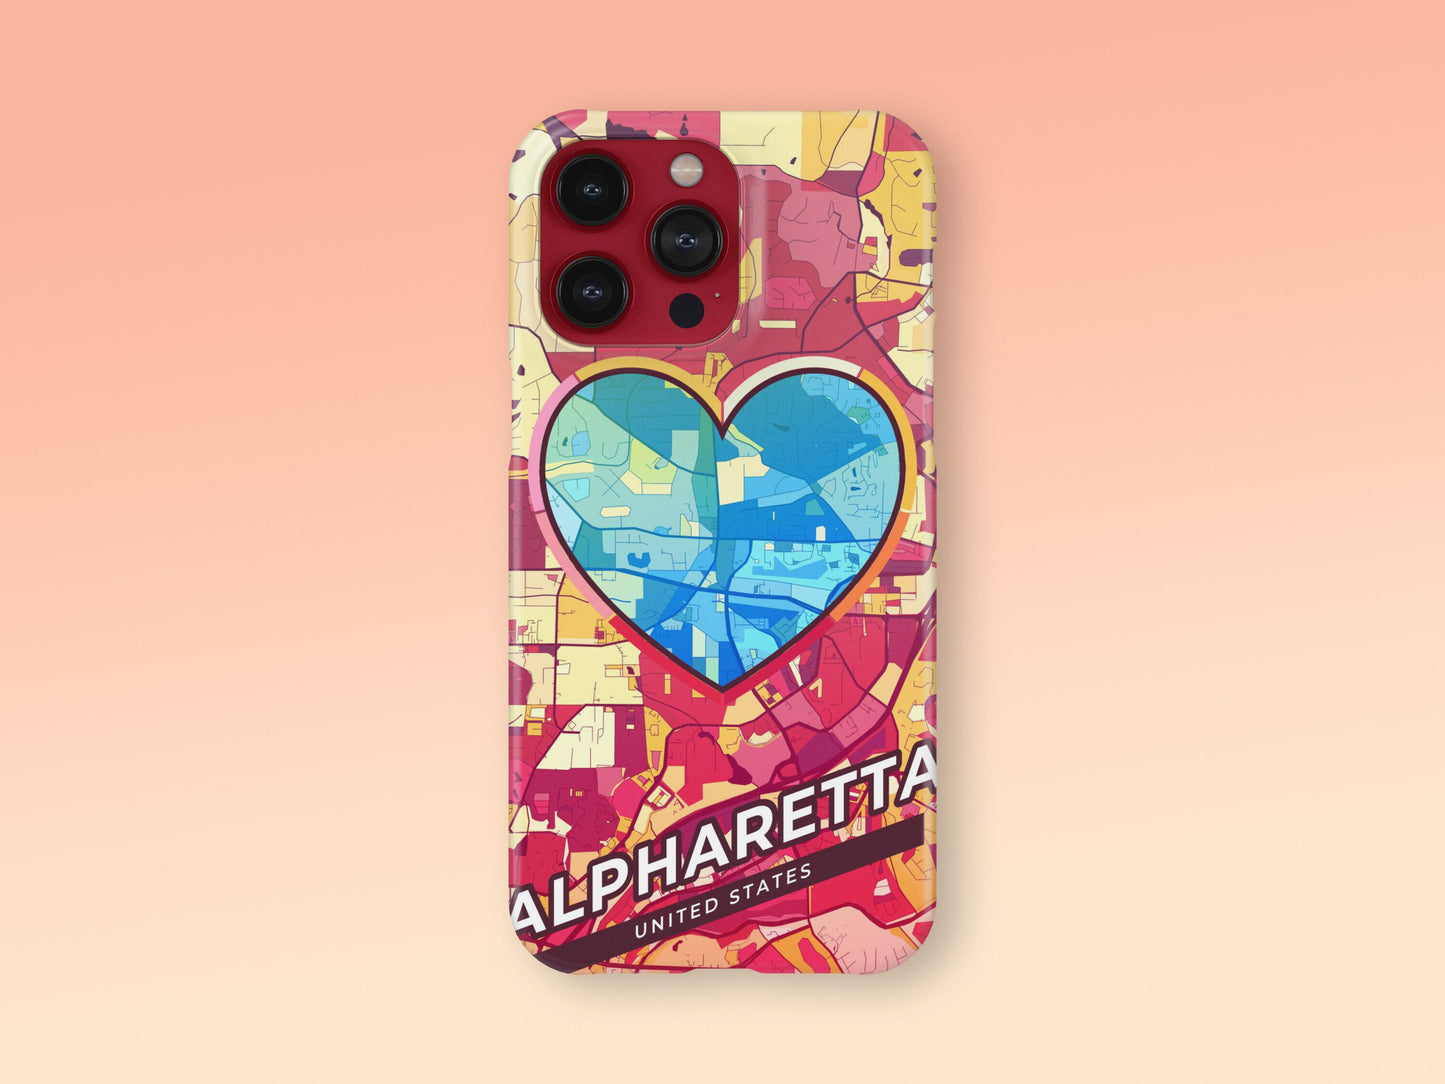 Alpharetta Georgia slim phone case with colorful icon. Birthday, wedding or housewarming gift. Couple match cases. 2